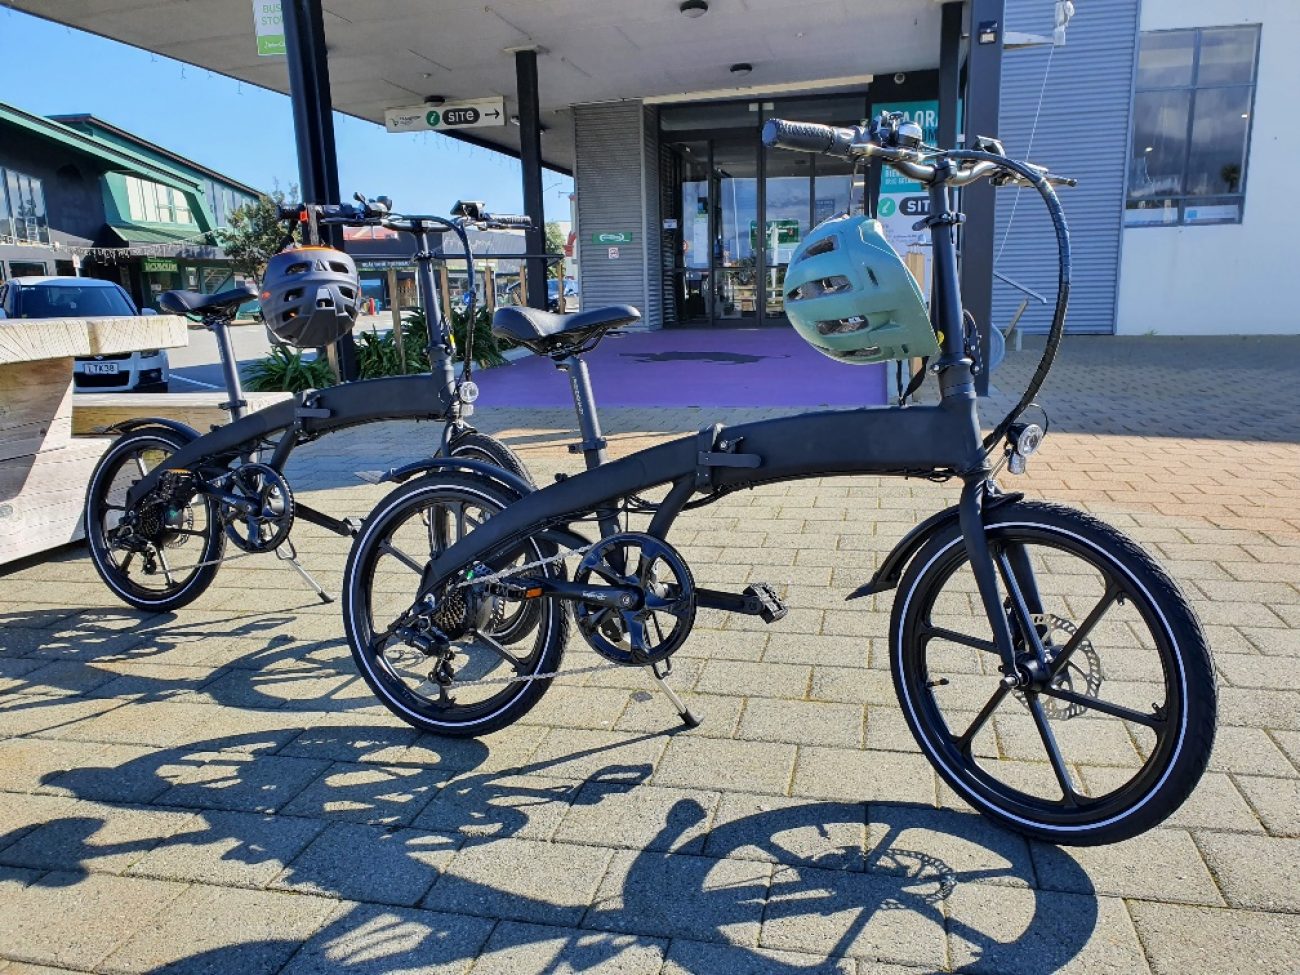 New Toyota e-bikes for Council